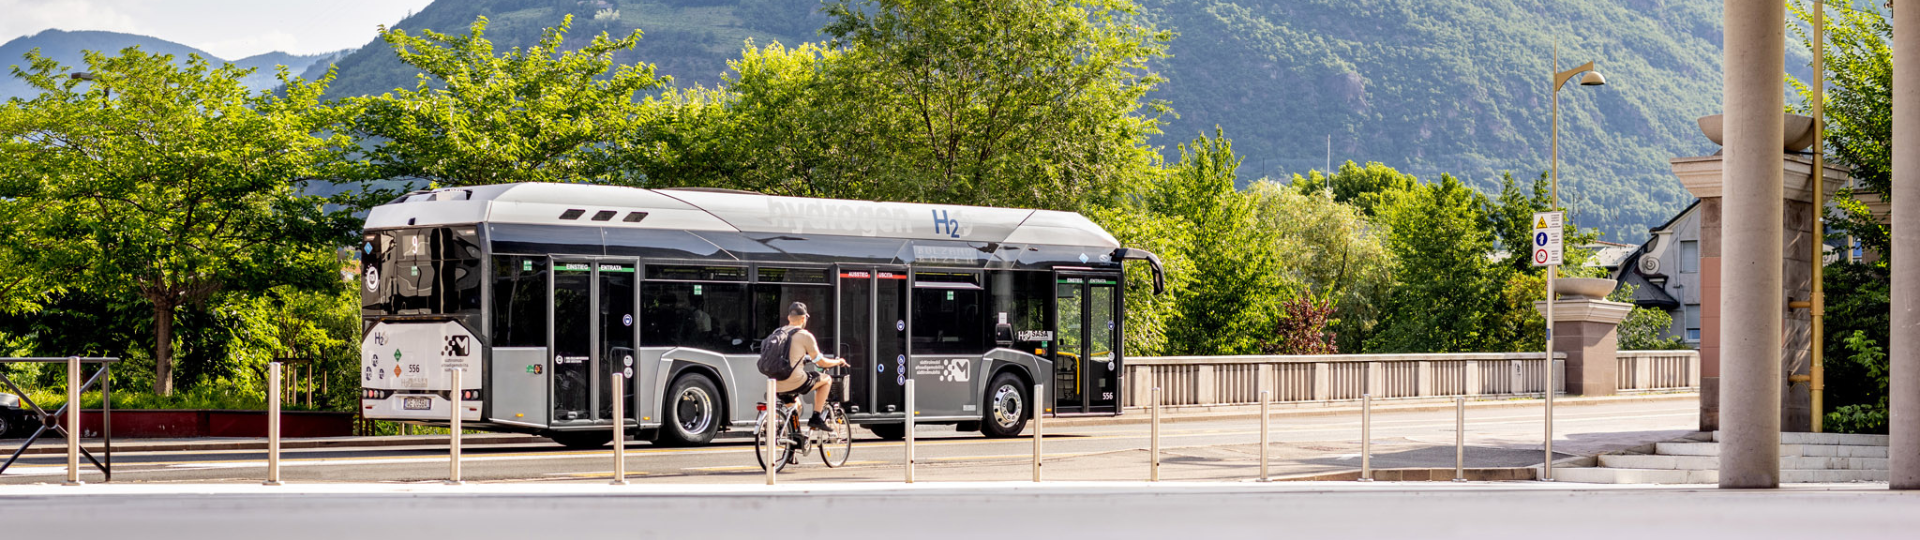 Solaris z dwoma bezemisyjnymi autobusami na targach European Mobility Expo w Paryżu